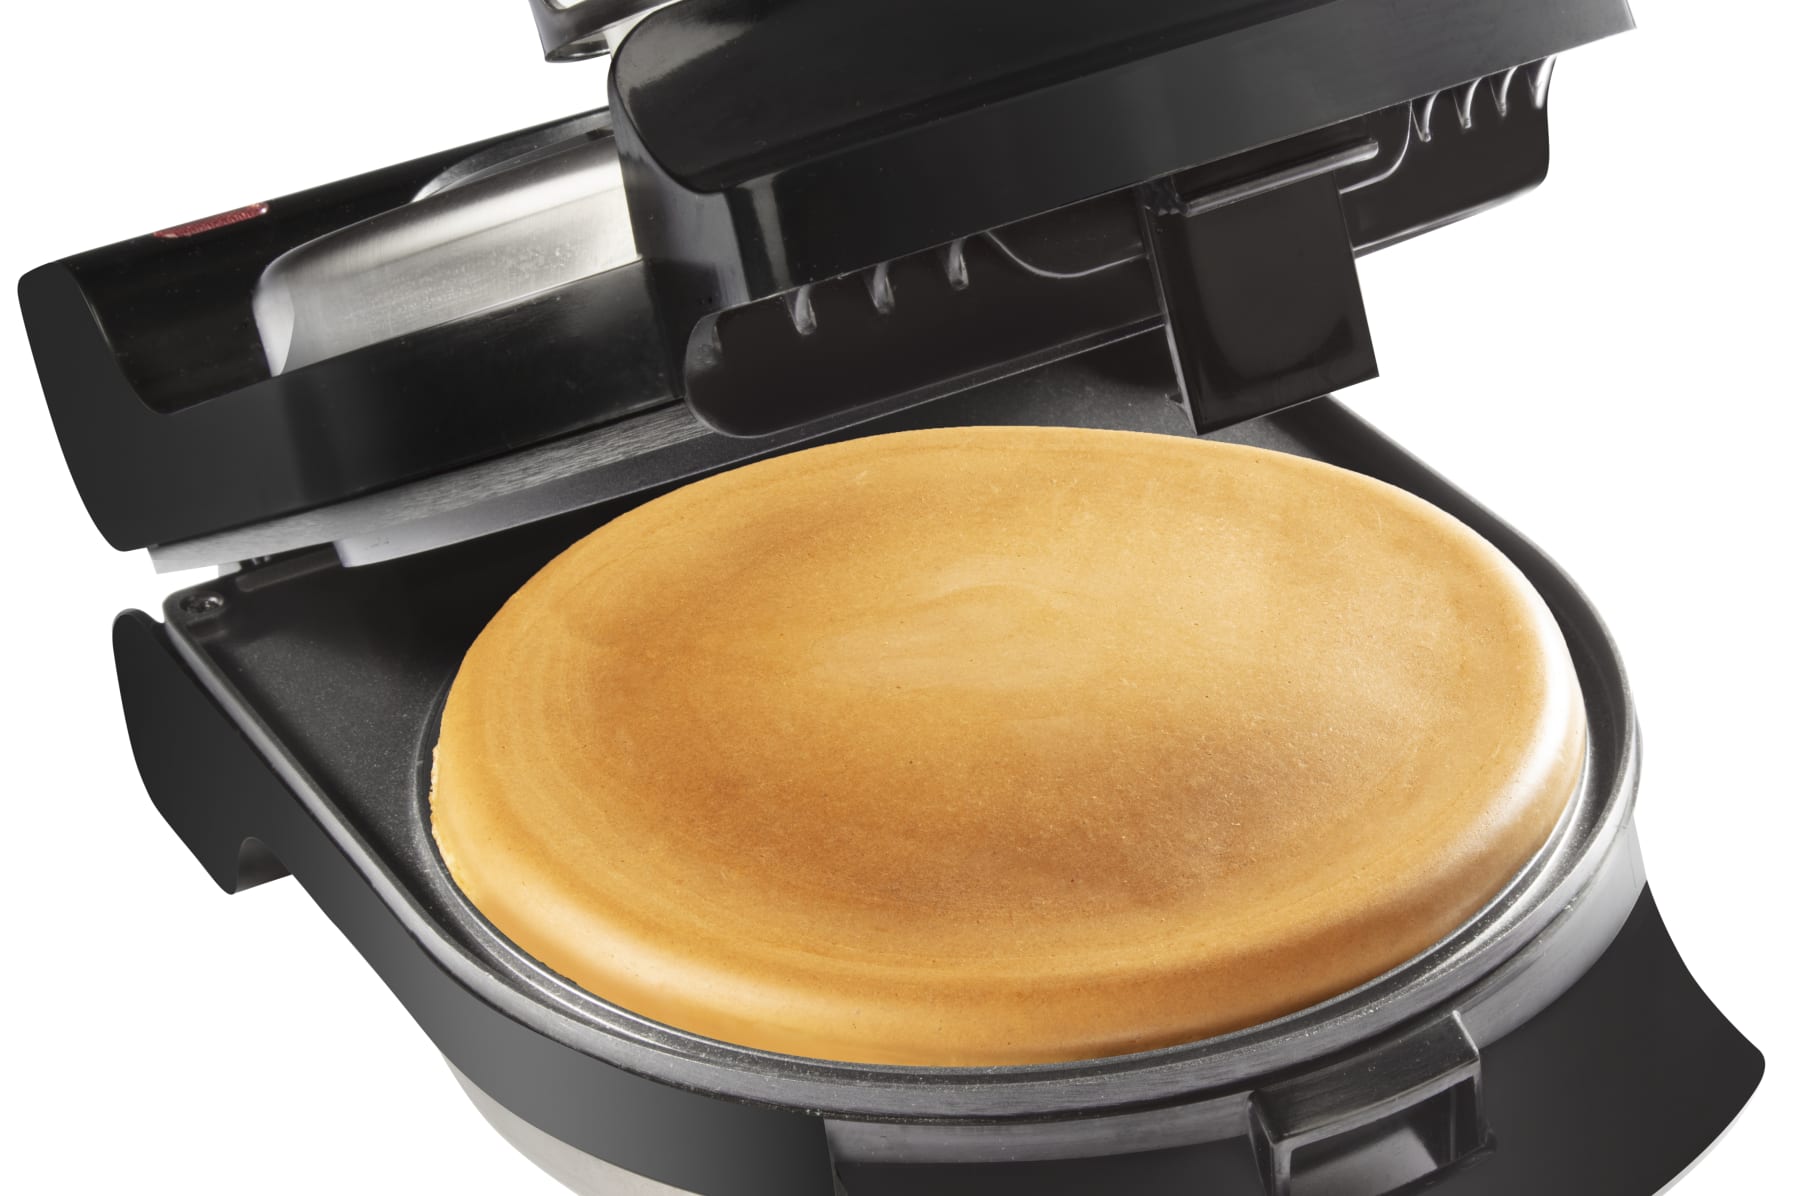 The Amazing Make-Your-Own Stuffed Pancake Maker